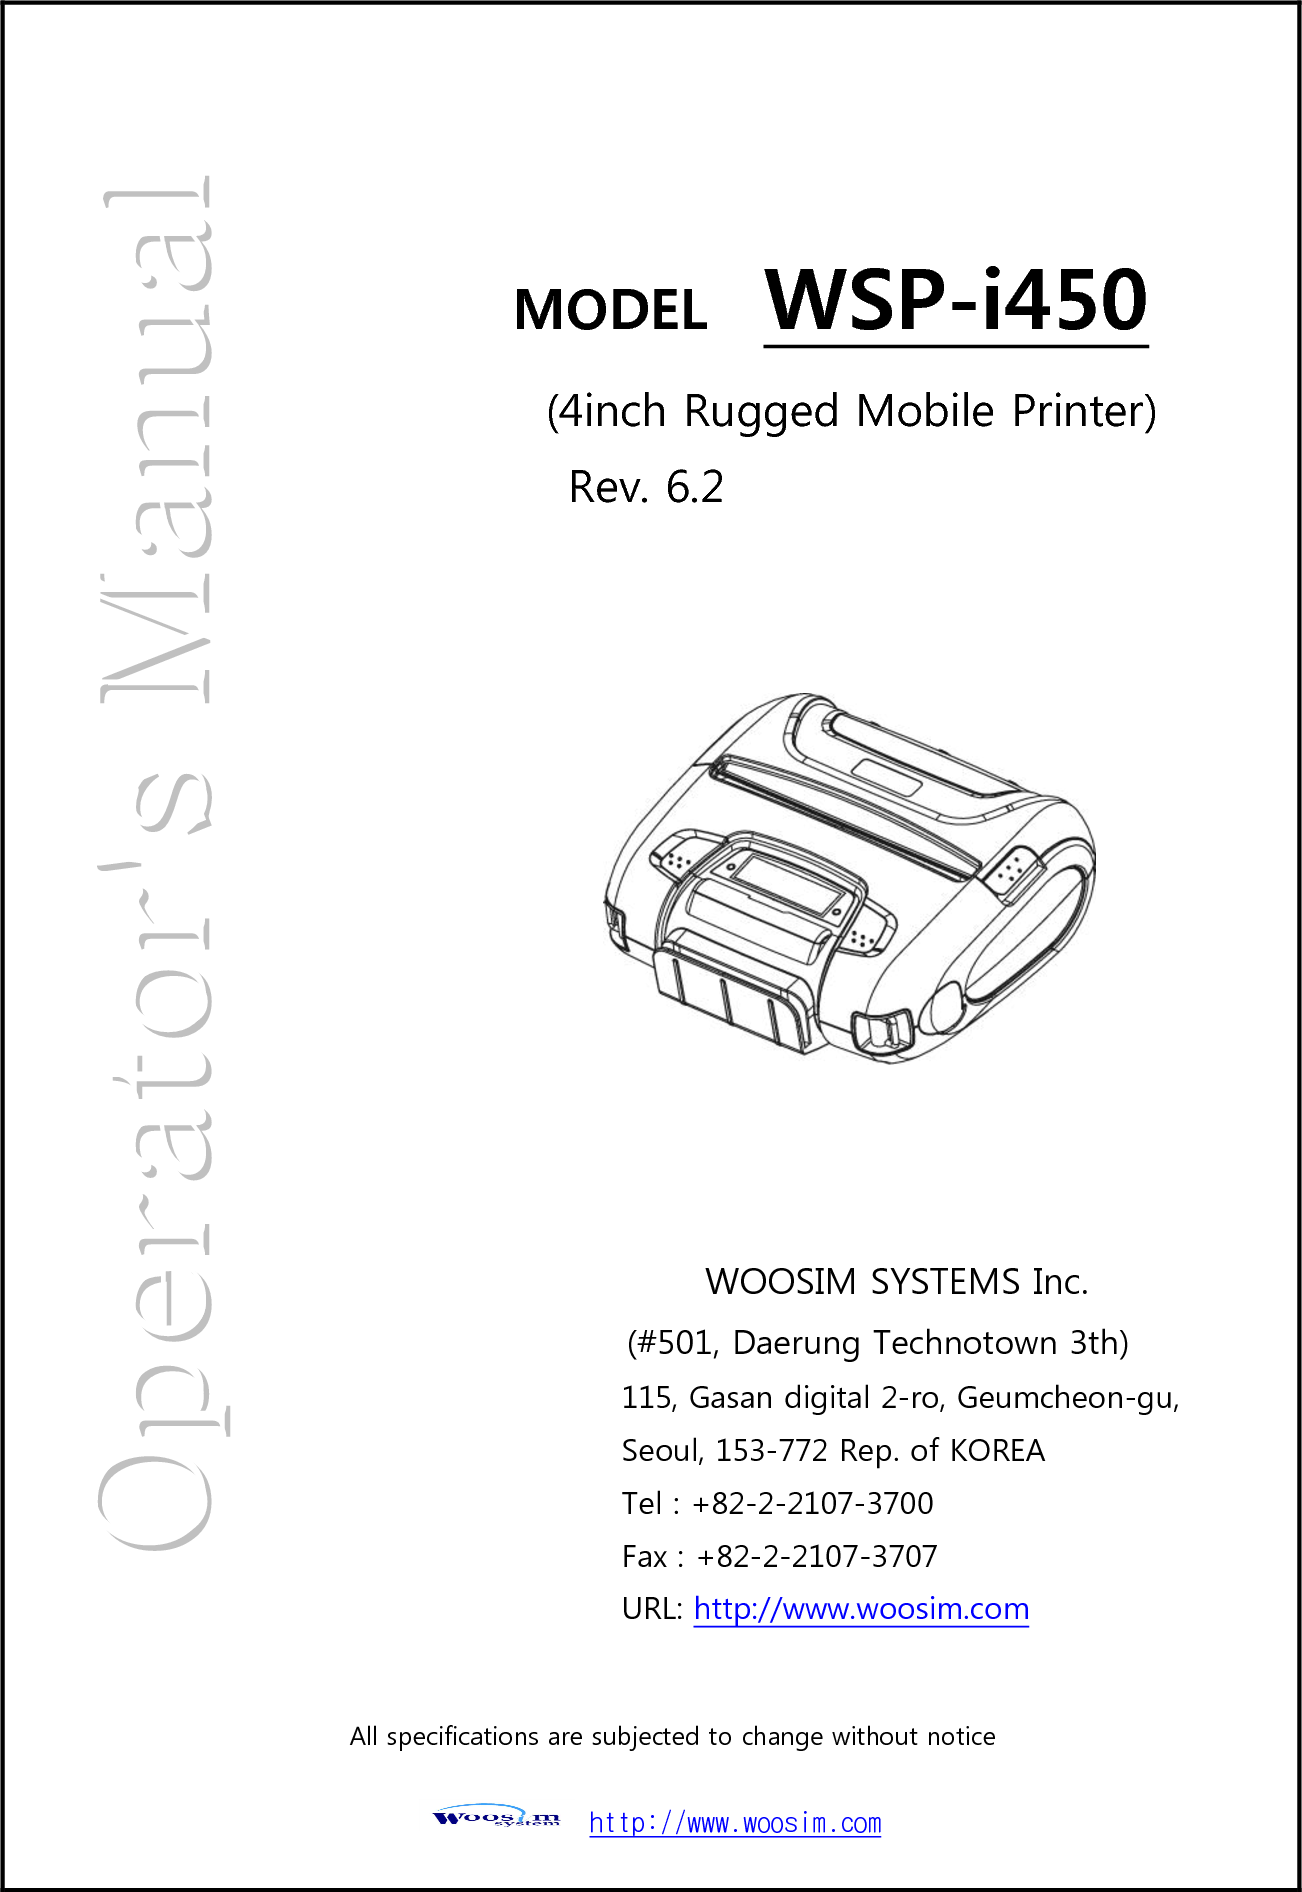  http://www.woosim.com                                                        MODEL    WSP-i450    (4inch Rugged Mobile Printer)   Rev. 6.2 WOOSIM SYSTEMS Inc. (#501, Daerung Technotown 3th) 115, Gasan digital 2-ro, Geumcheon-gu, Seoul, 153-772 Rep. of KOREA Tel : +82-2-2107-3700 Fax : +82-2-2107-3707 URL: http://www.woosim.com  All specifications are subjected to change without notice  